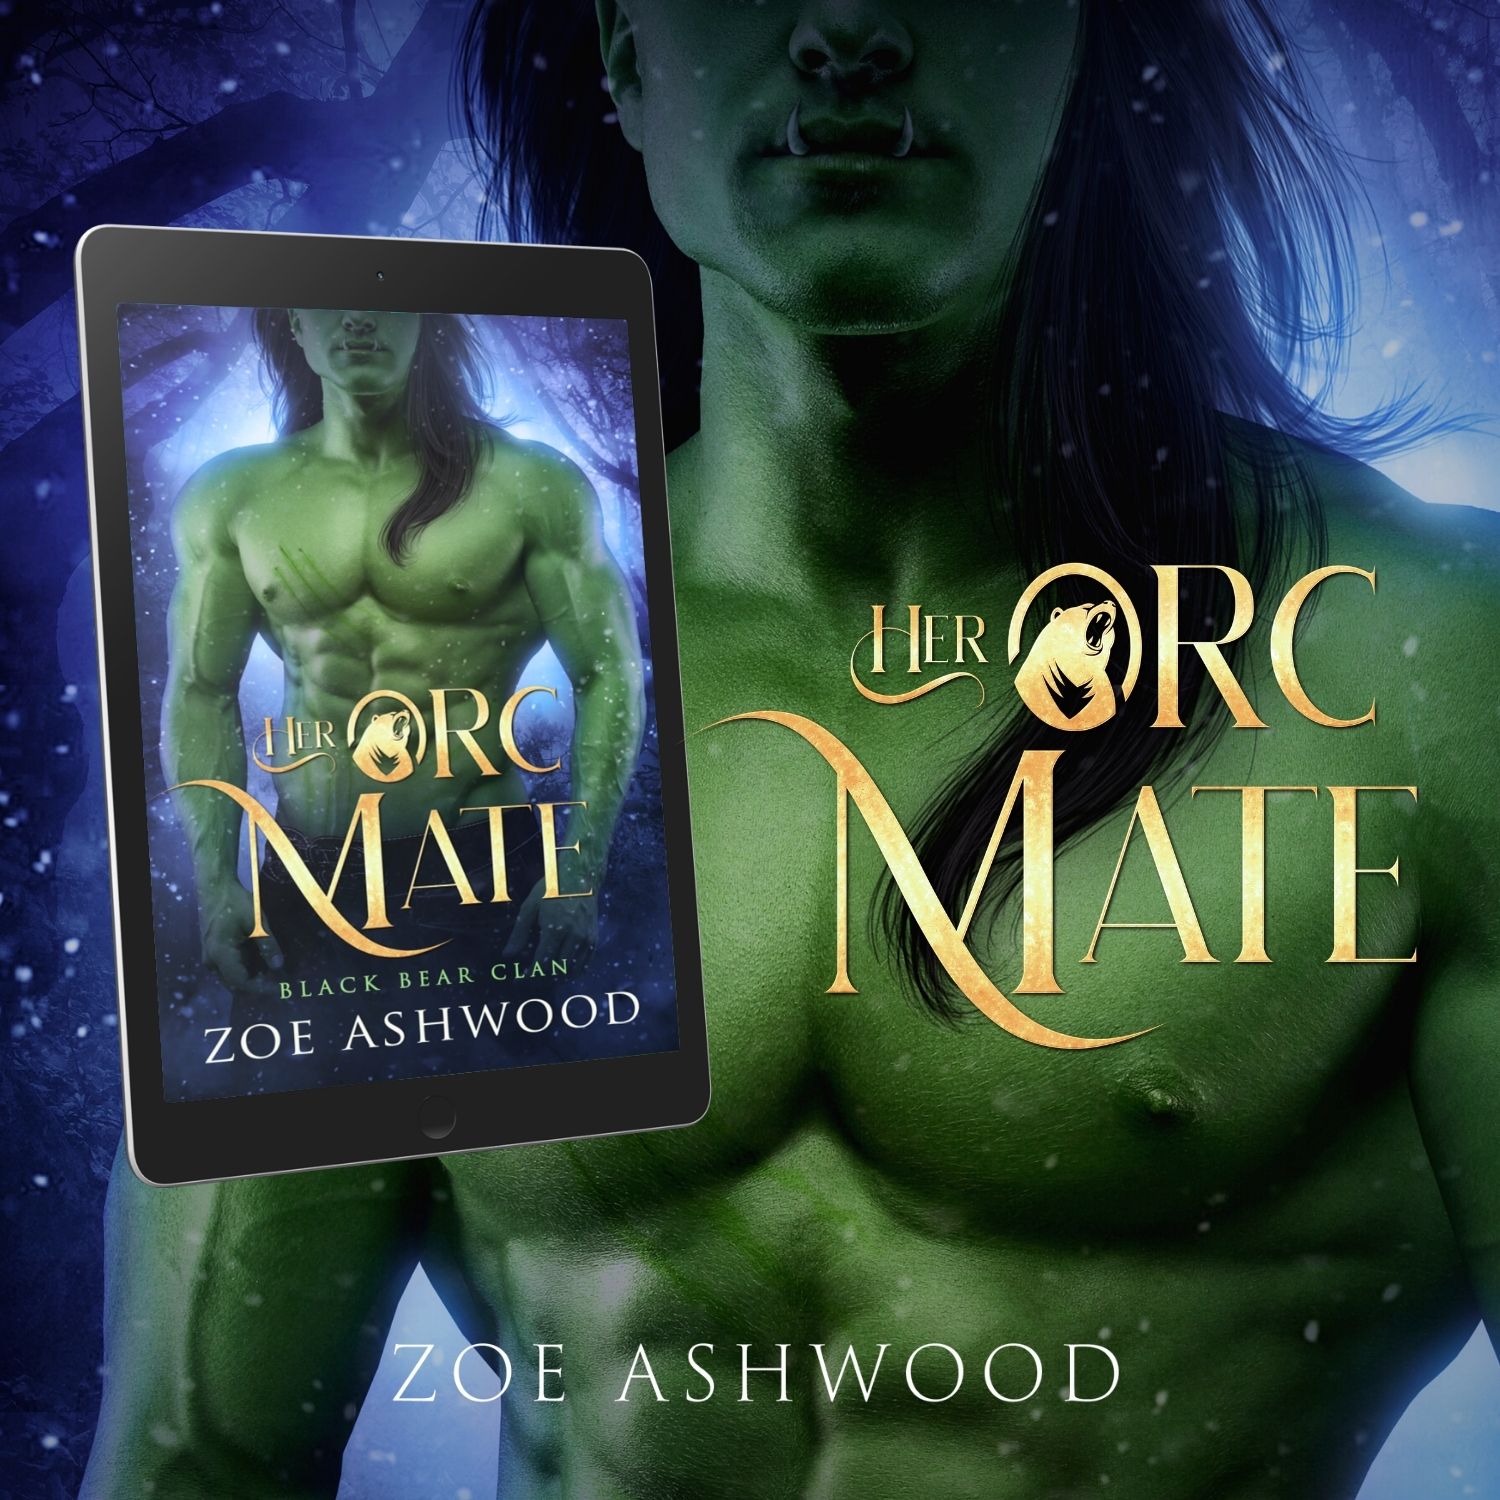 Her Orc Mate - Zoe Ashwood - a monster fantasy romance